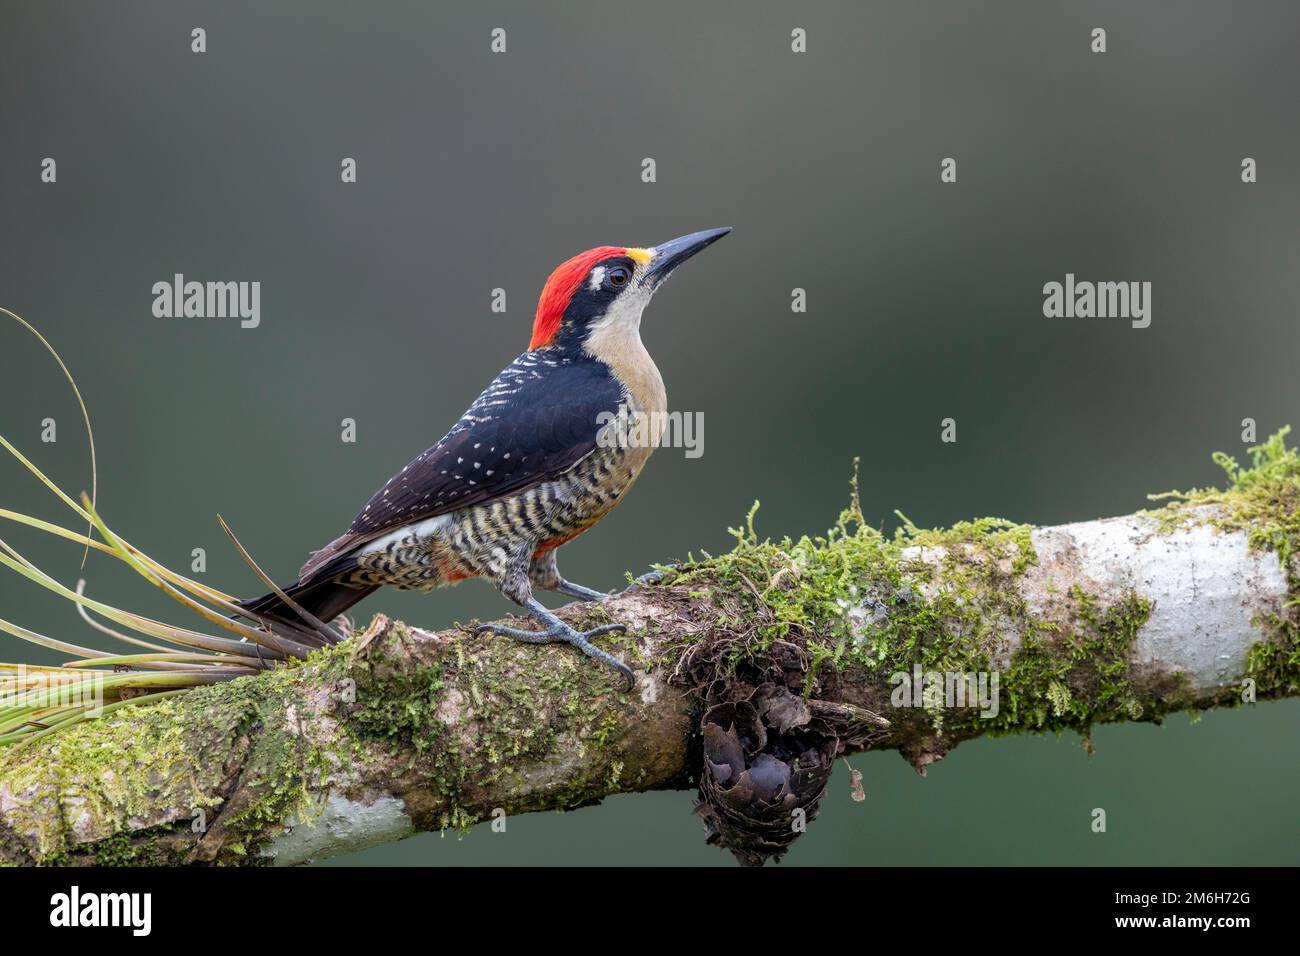 Black-cheeked woodpecker (Melanerpes pucherani) on branch with bromeliad, Boca Tapada region, Costa Rica Stock Photo